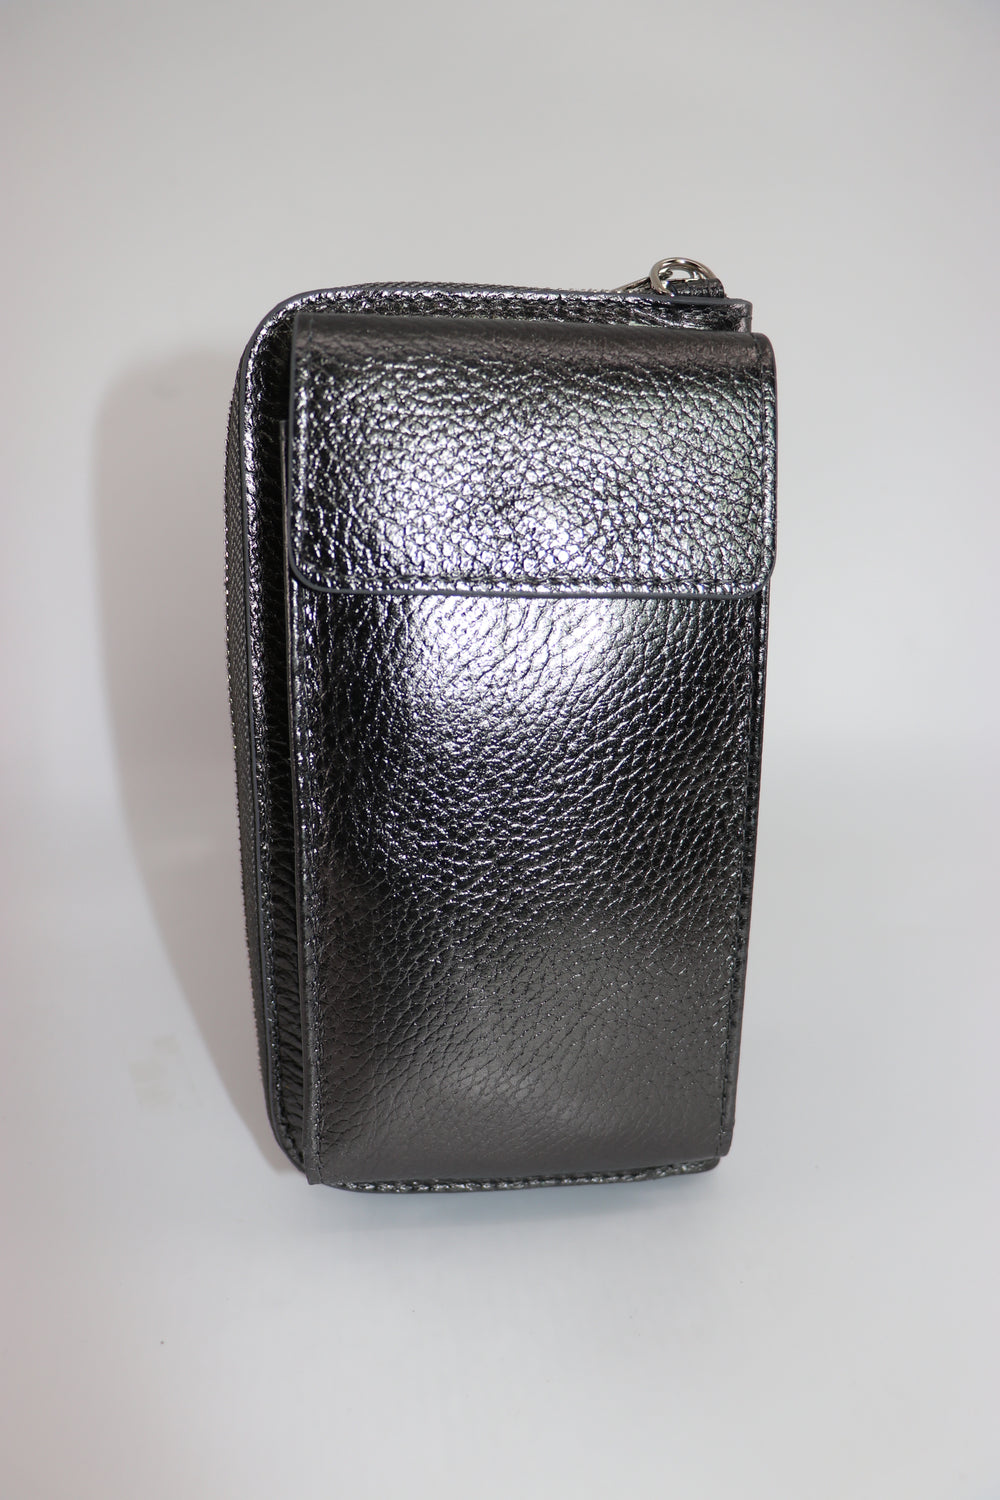 Bagitali Crossbody Leather Purse / Phone Bag - Iron Grey